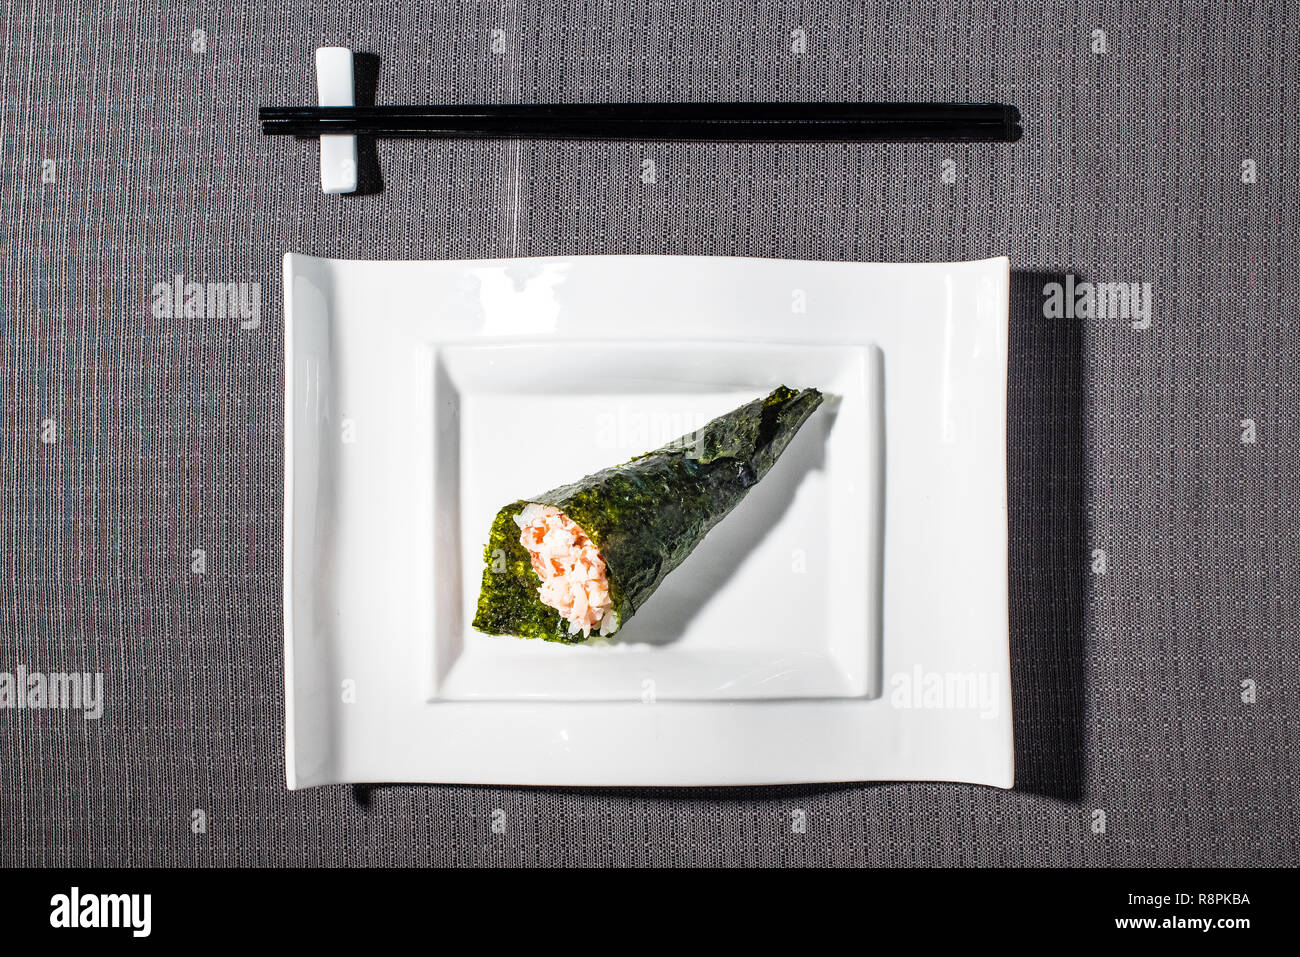 https://c8.alamy.com/comp/R8PKBA/lobster-temaki-variant-of-typical-japanese-sushi-fusion-cousine-R8PKBA.jpg